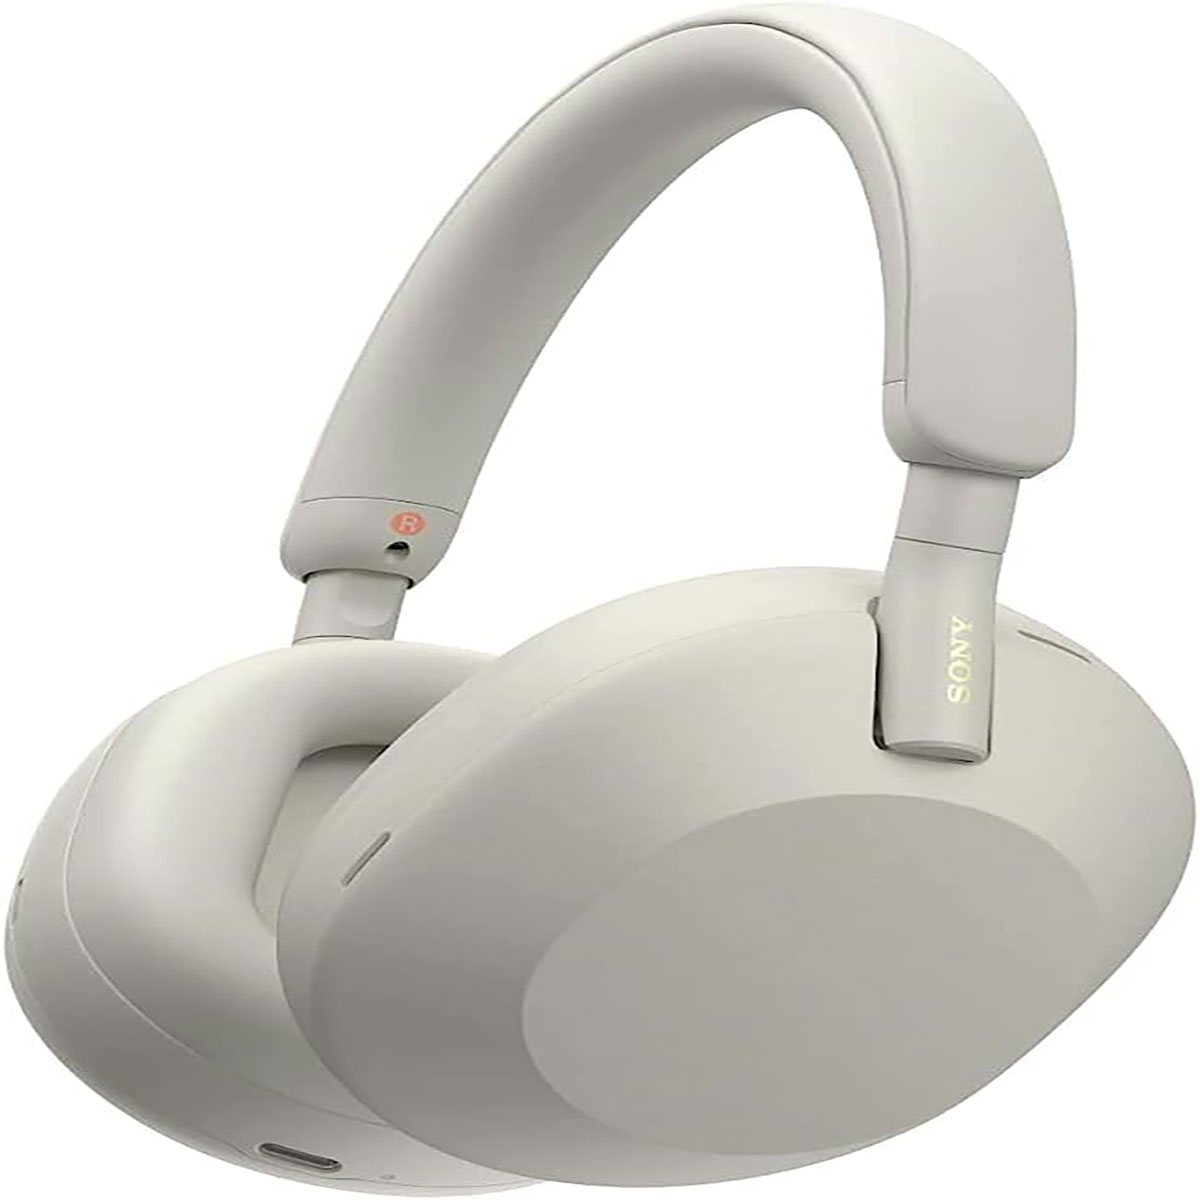 Sony - Wireless Noise-Canceling Over-the-Ear Headphones, Blue